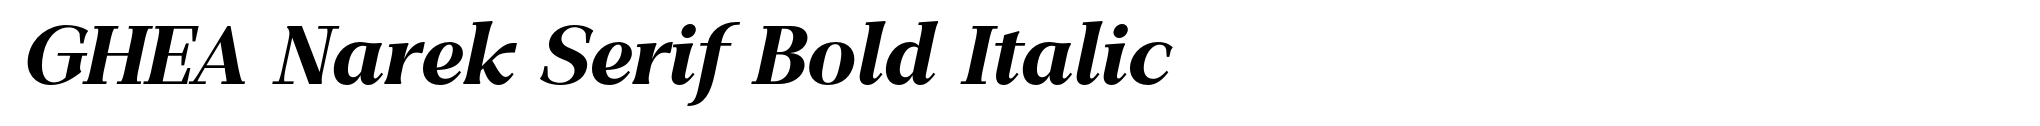 GHEA Narek Serif Bold Italic image